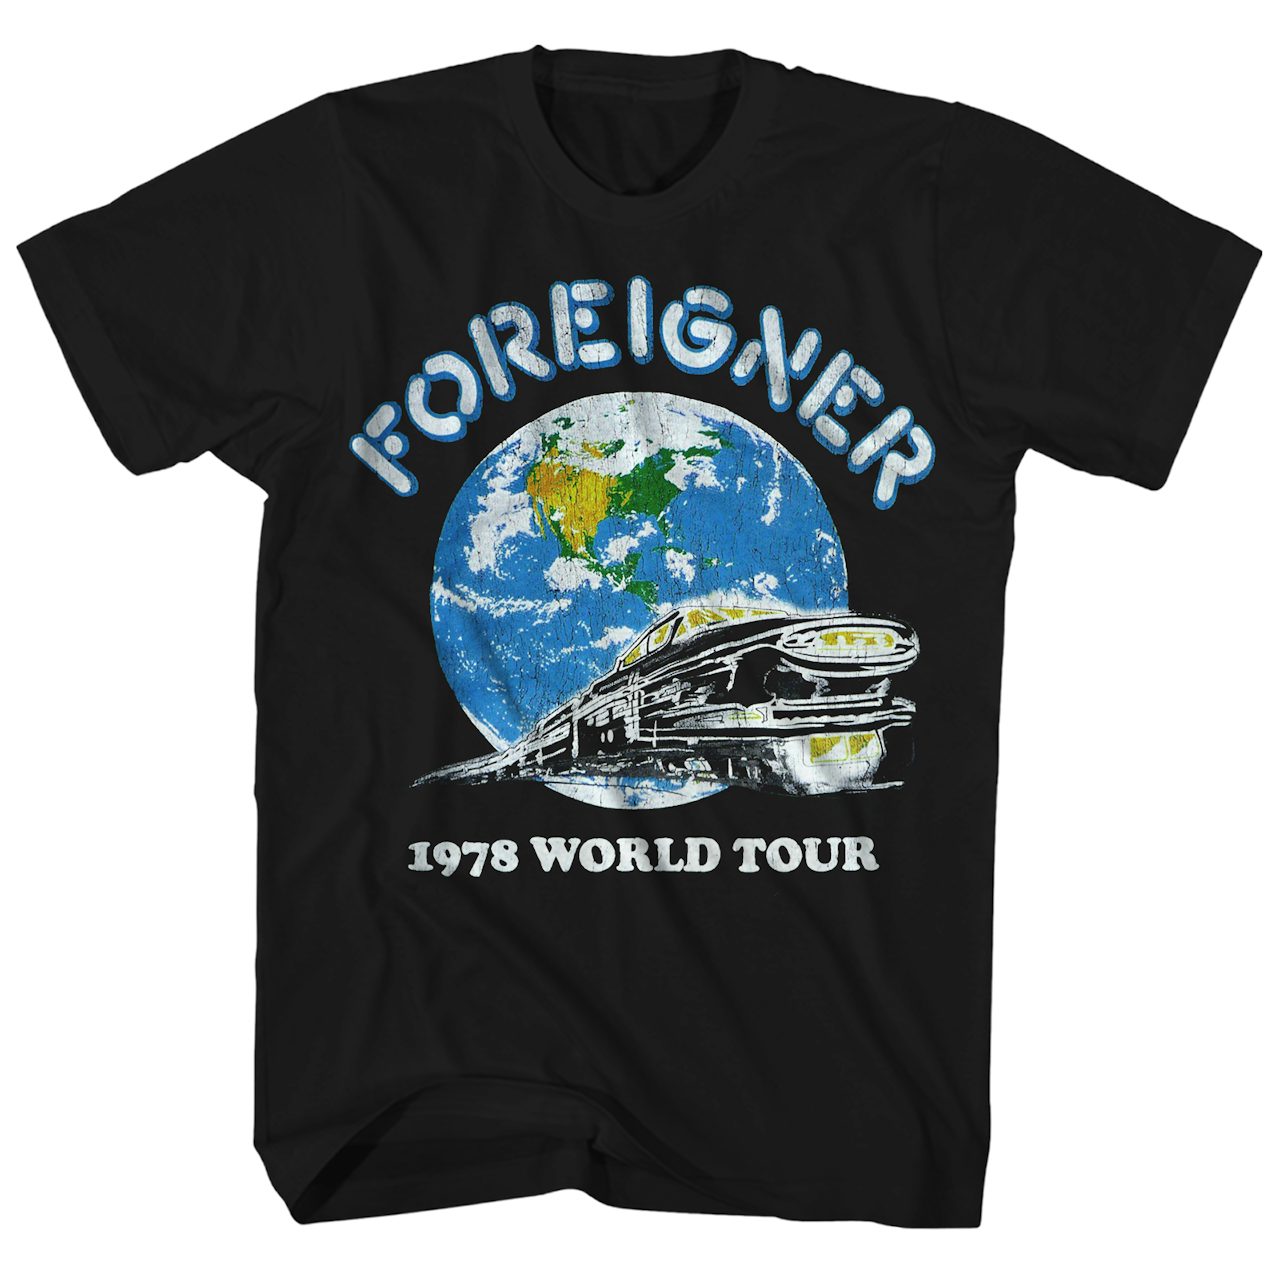 Foreigner TShirt World Tour ’78 Foreigner Shirt (Reissue)